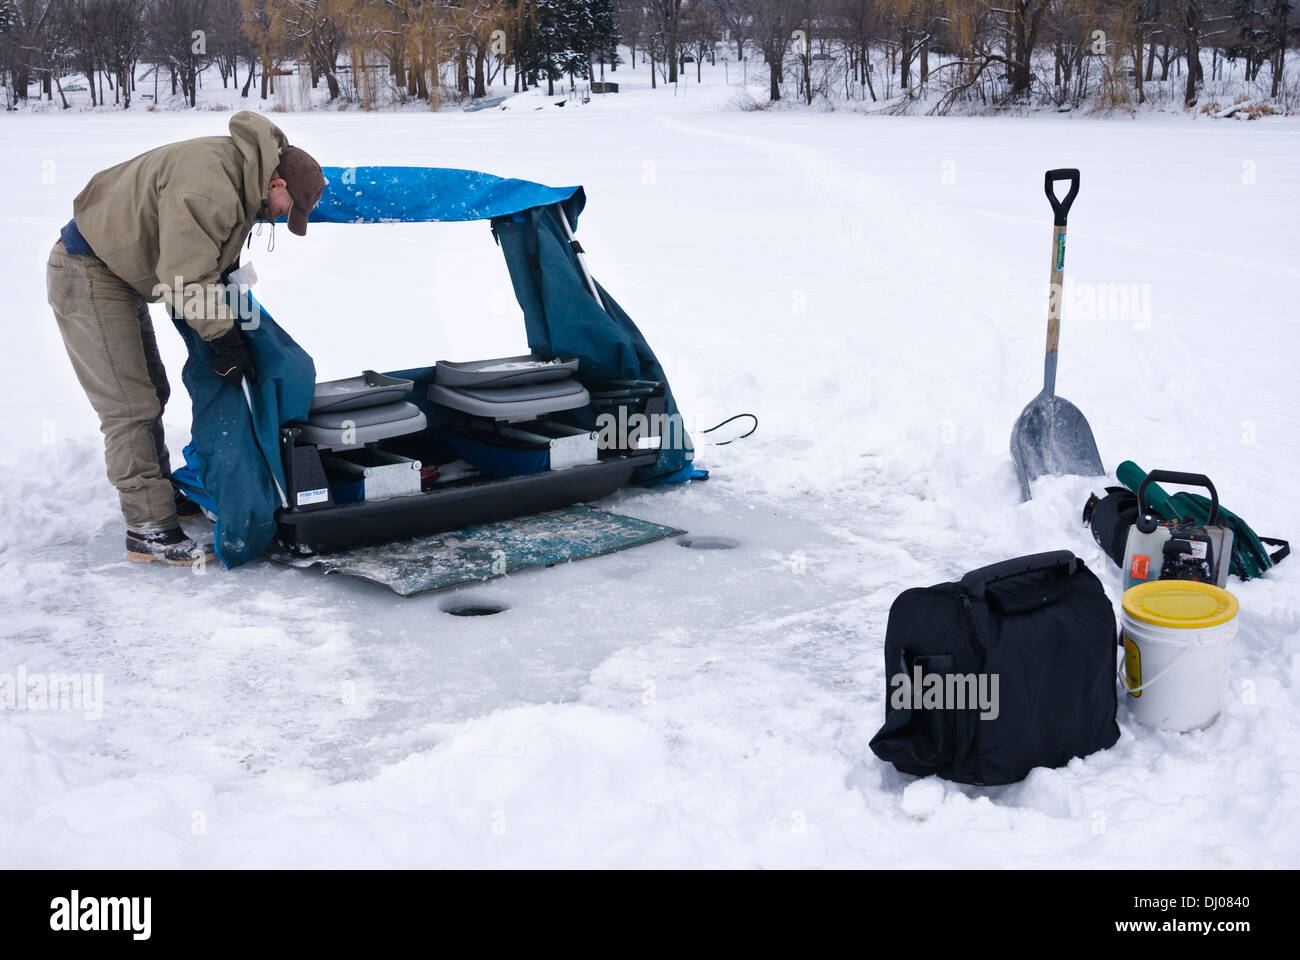 https://c8.alamy.com/comp/DJ0840/man-breaks-down-his-temporary-ice-fishing-shack-on-a-frozen-lake-minneapolis-DJ0840.jpg